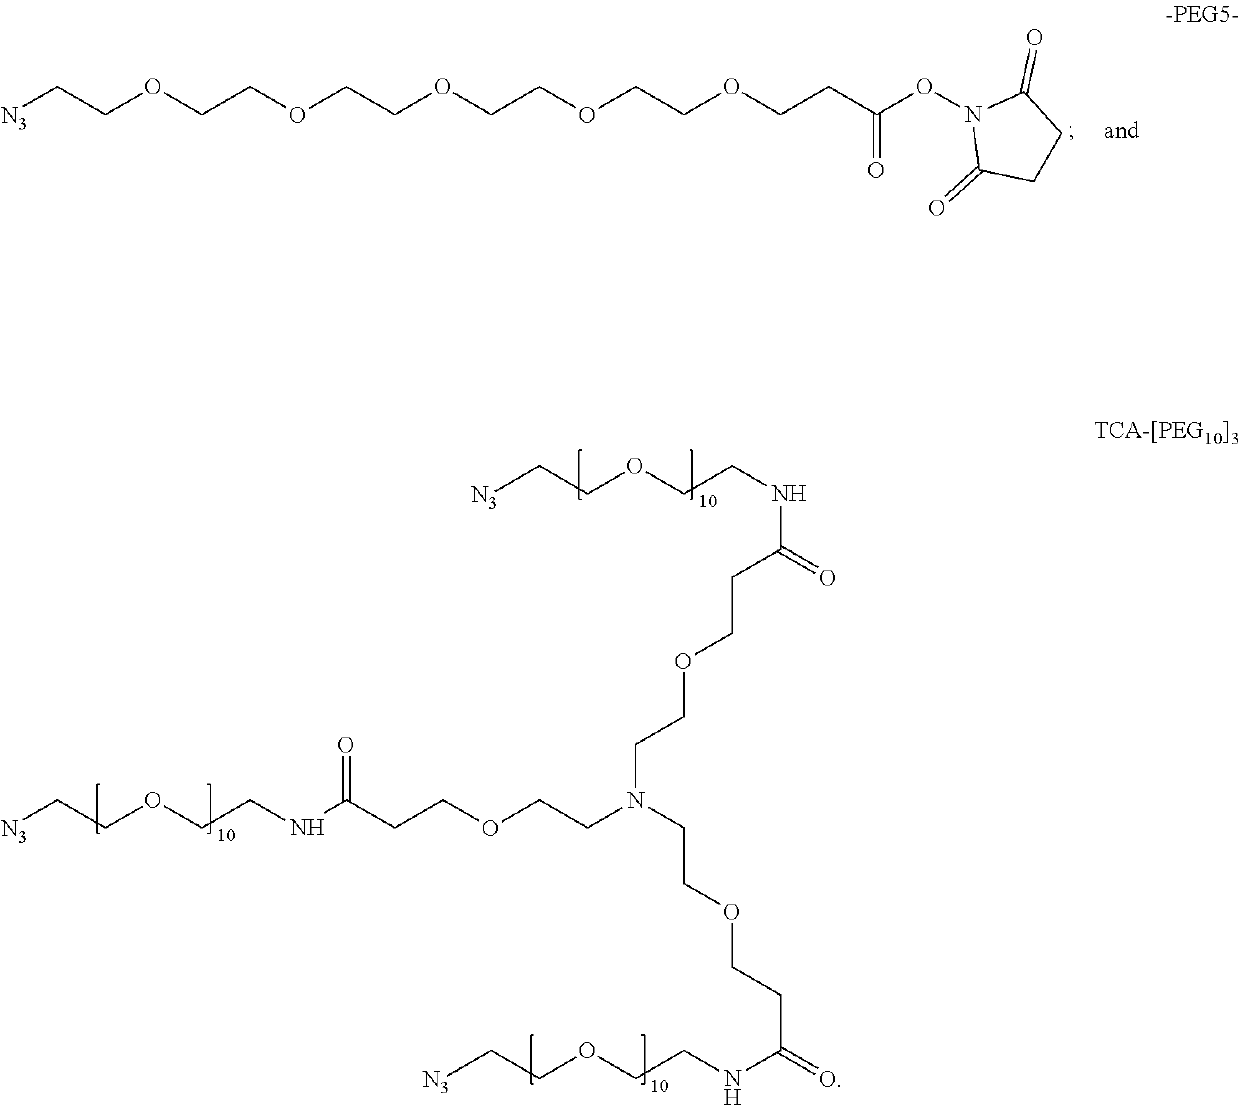 Heterotandem bicyclic peptide complexes